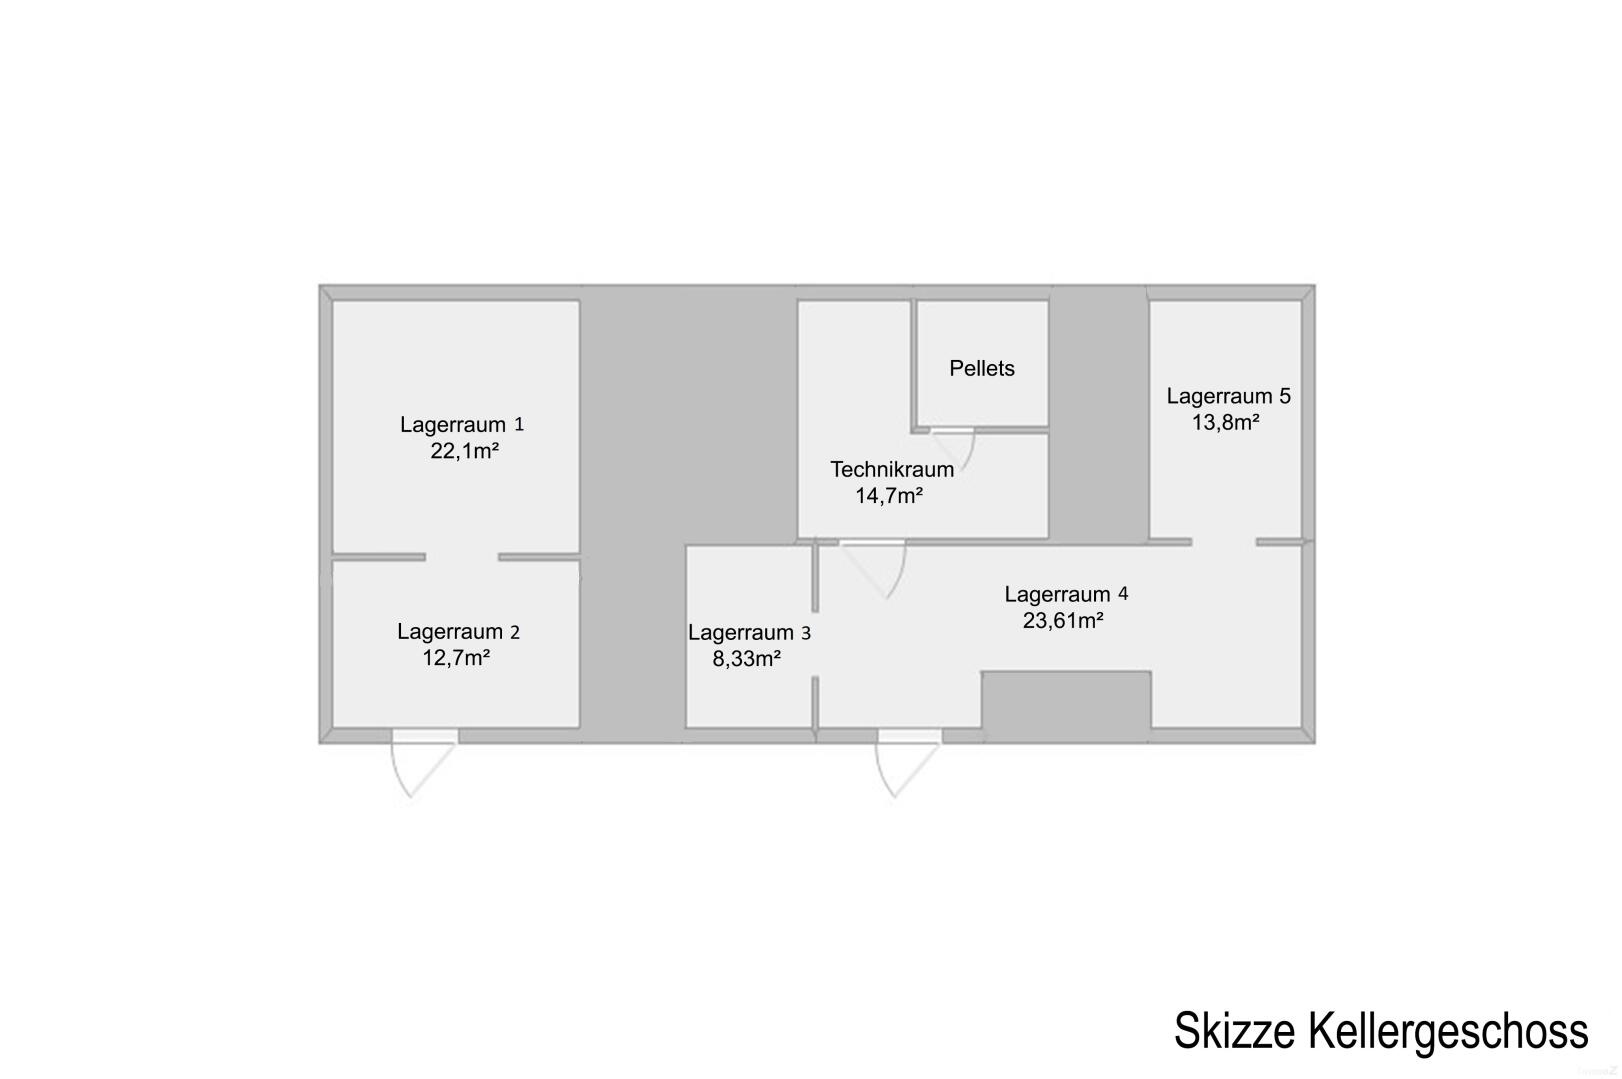 Haus zu kaufen: Oberwald, 8563 Ligist - Skizze Kellergeschoss inkl. Eigenmaß